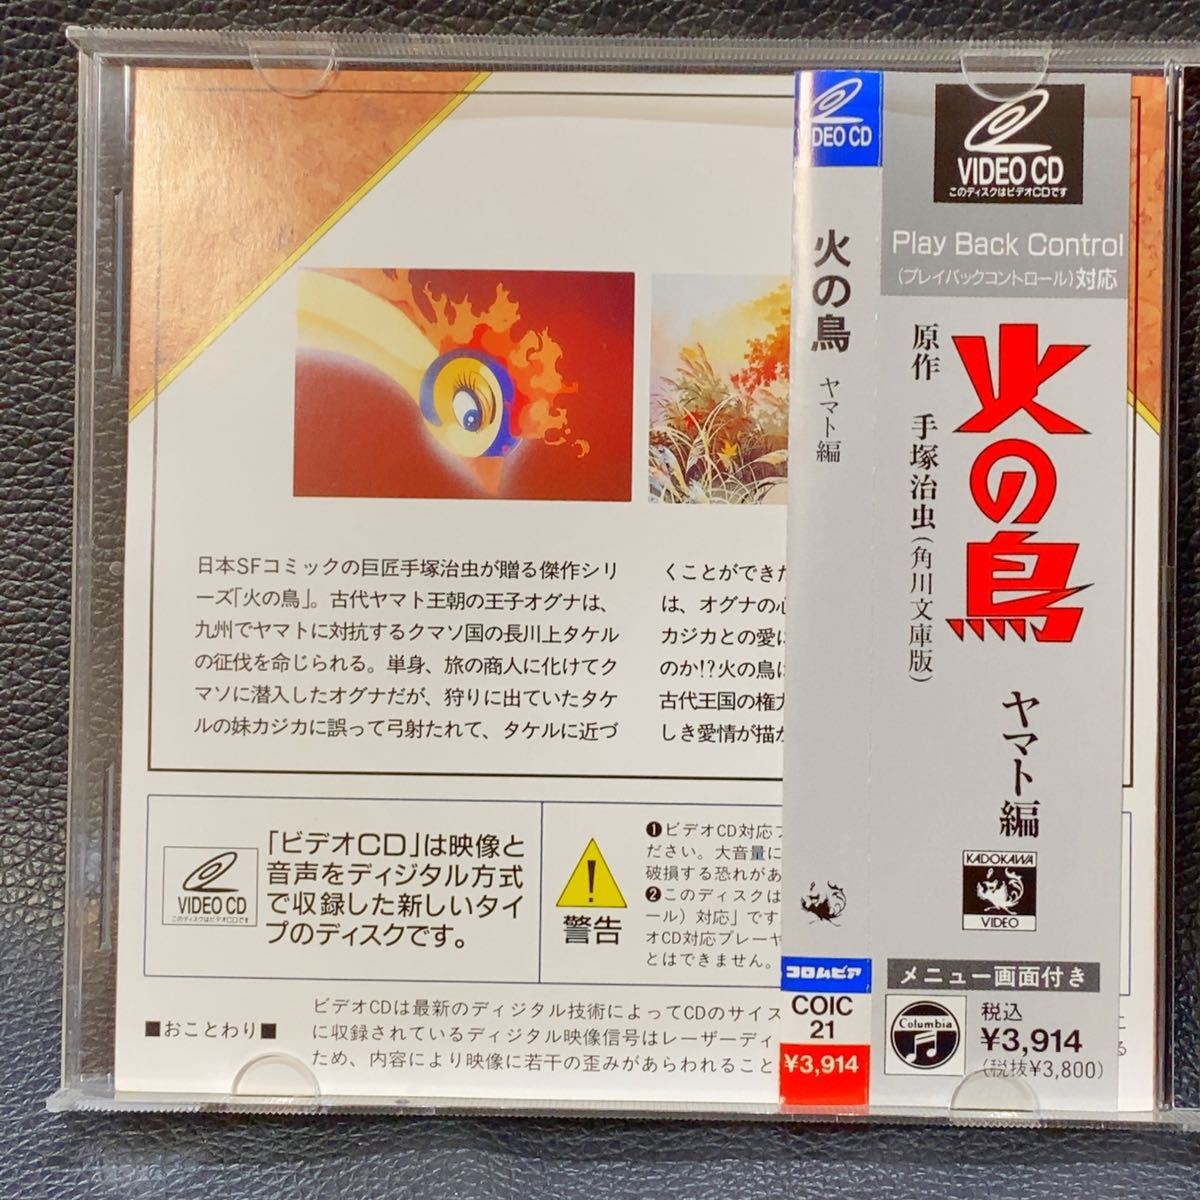 [ видео CD] феникс Yamato сборник рука .. насекомое . река библиотека версия VIDEOCD рука . production редкий 